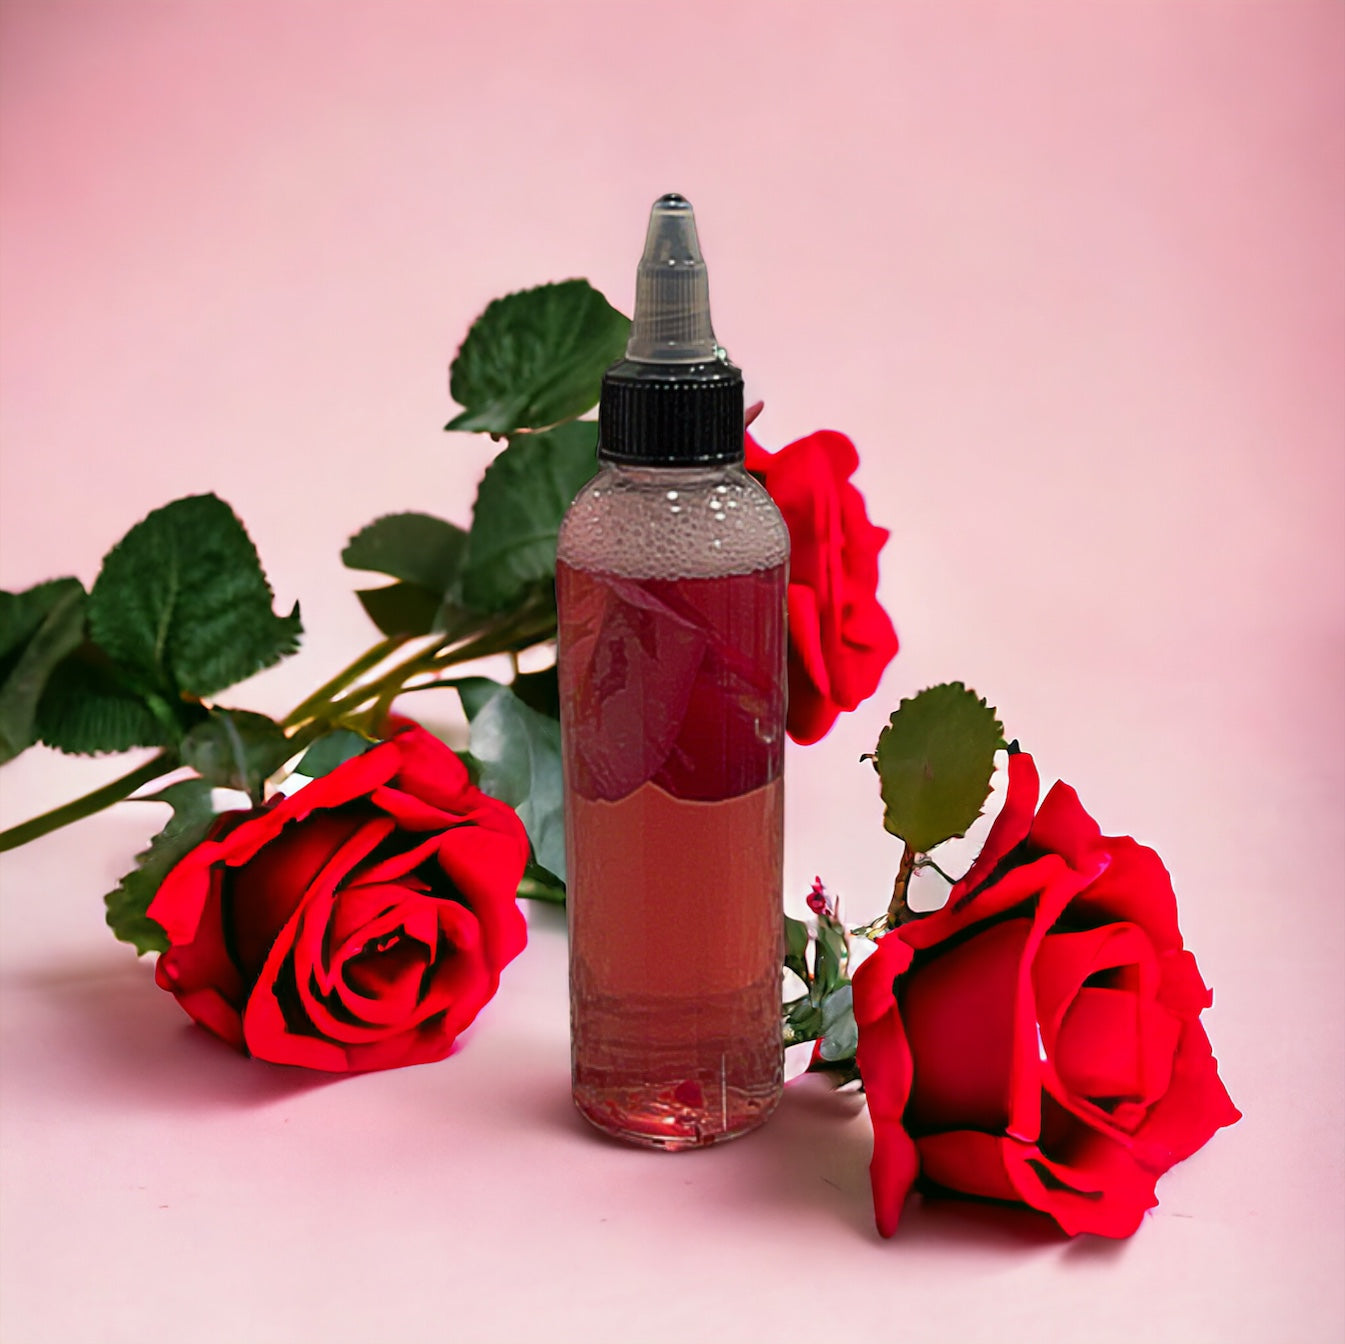 Rose Water: Facial cleanser